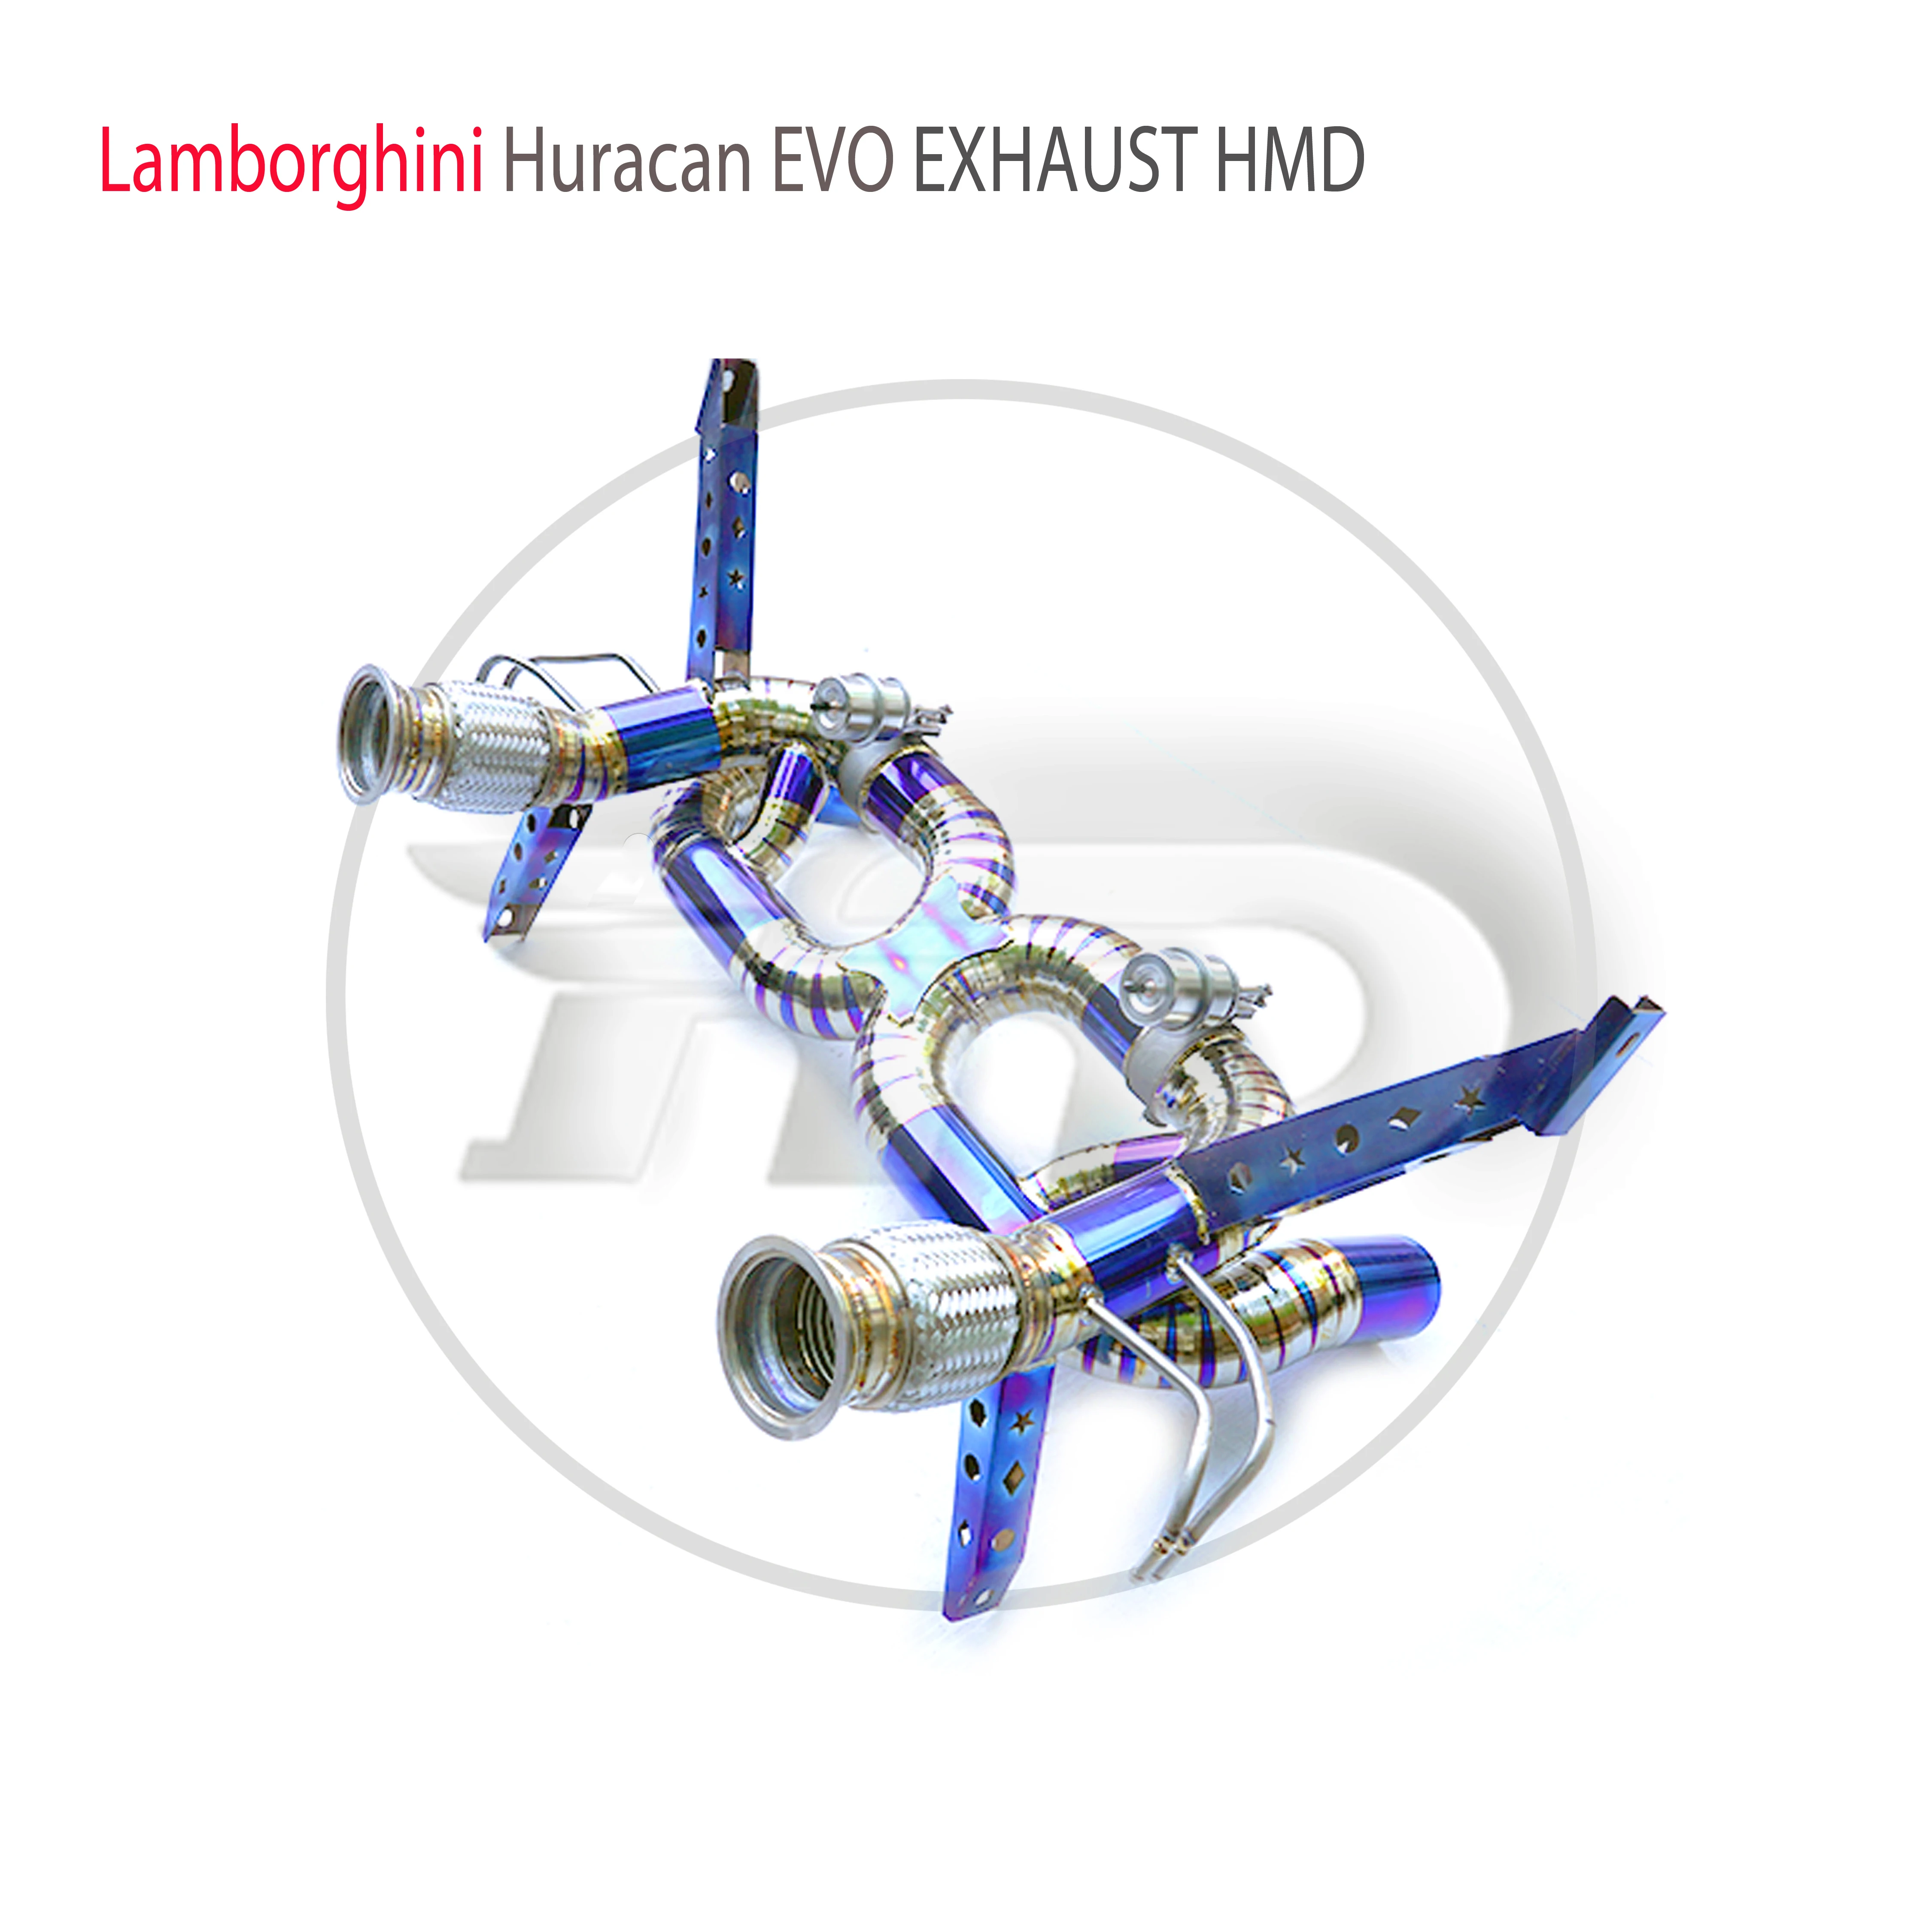 

HMD Titanium Alloy Exhaust System Performance Catback for Lamborghini Huracan EVO Auto Modification High Pitch Version